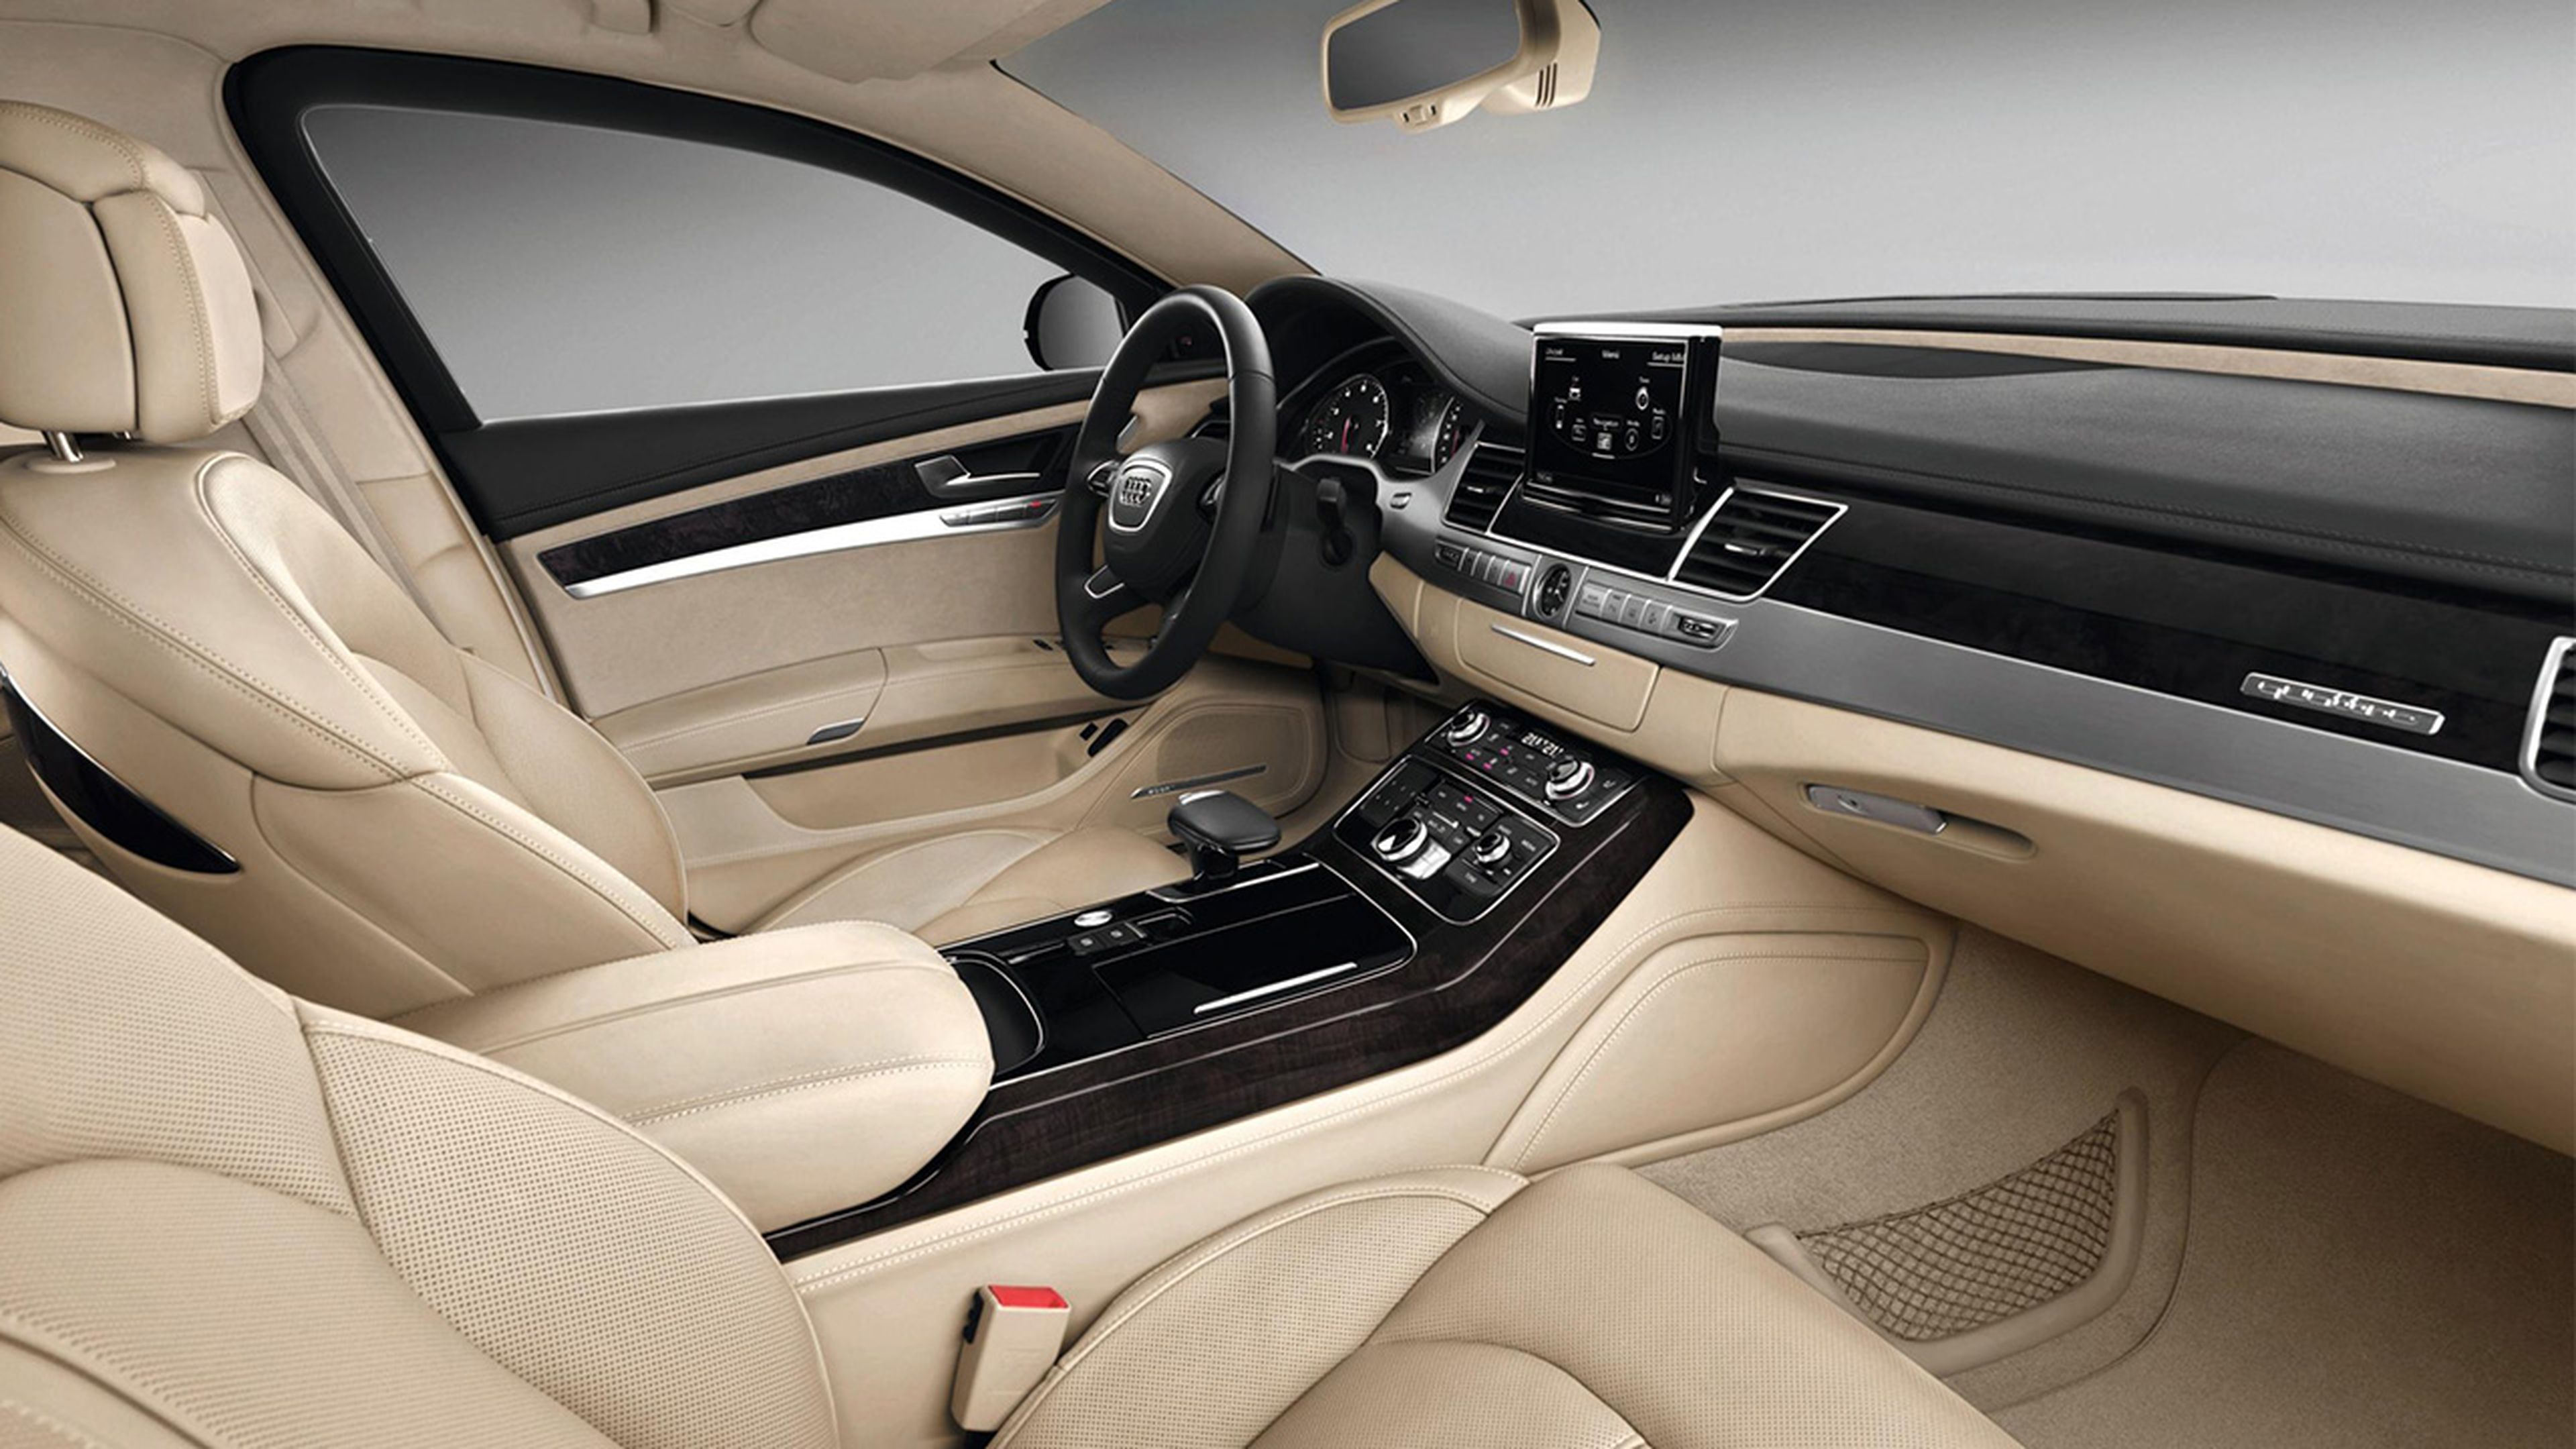 Audi A8L Security interior